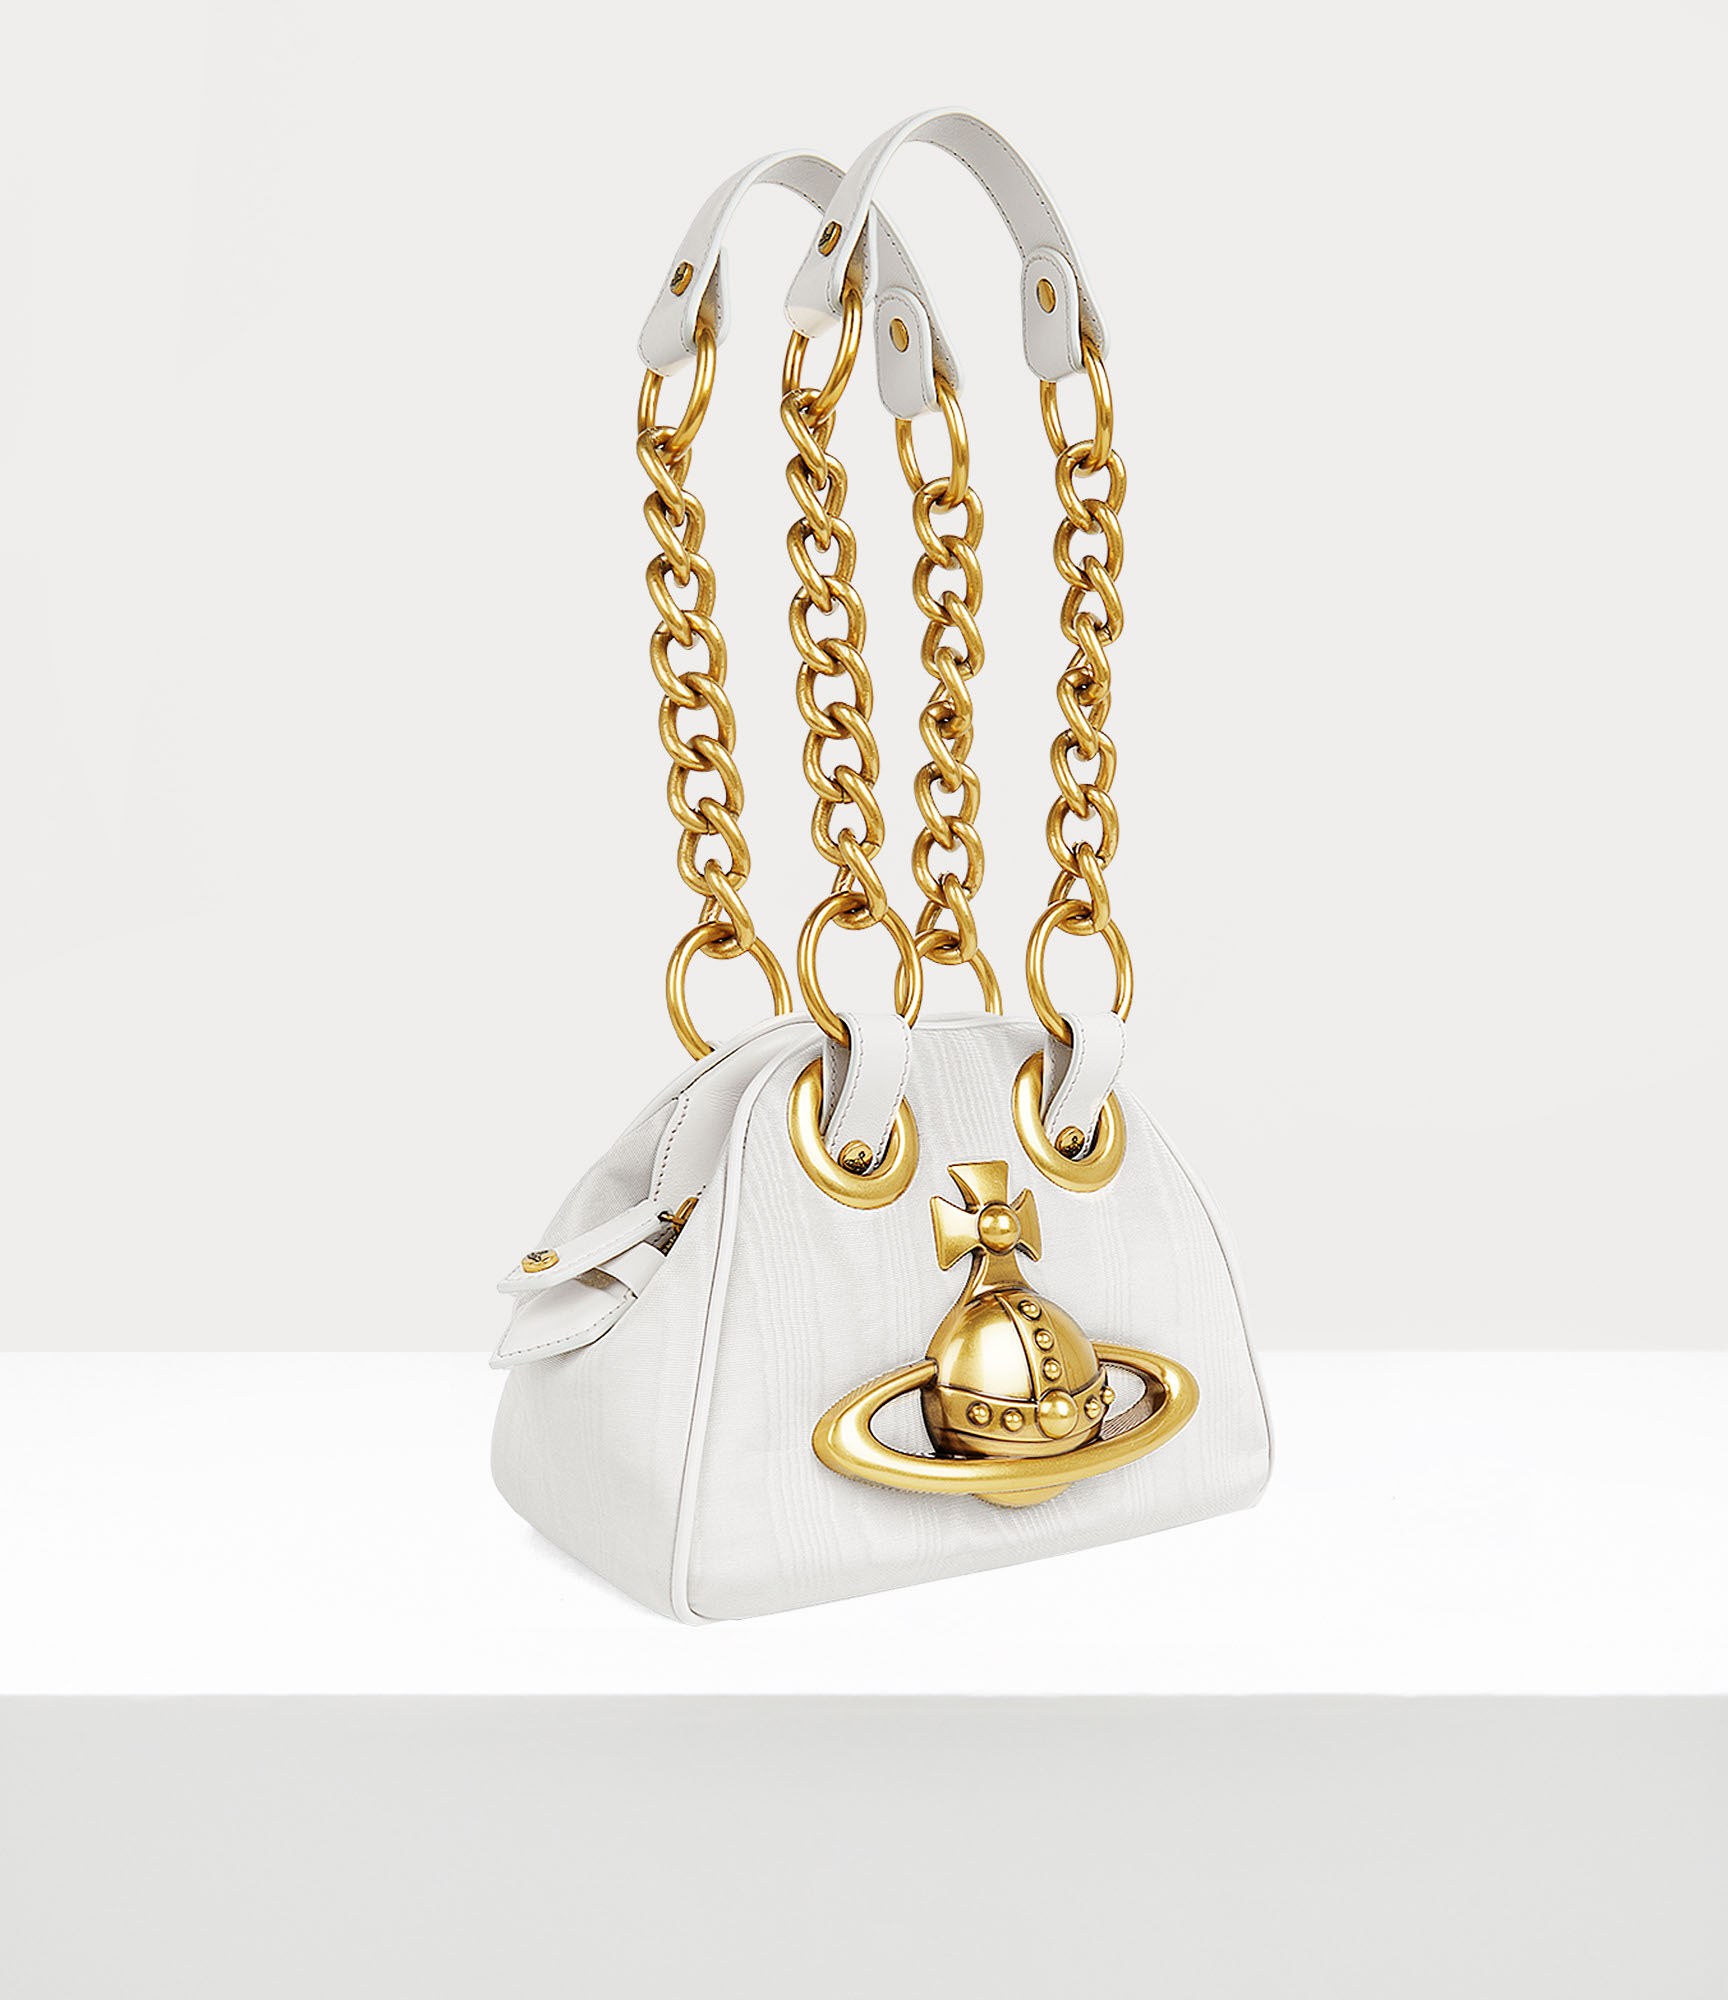 Archive Orb Chain Handbag in CREAM | Vivienne Westwood®